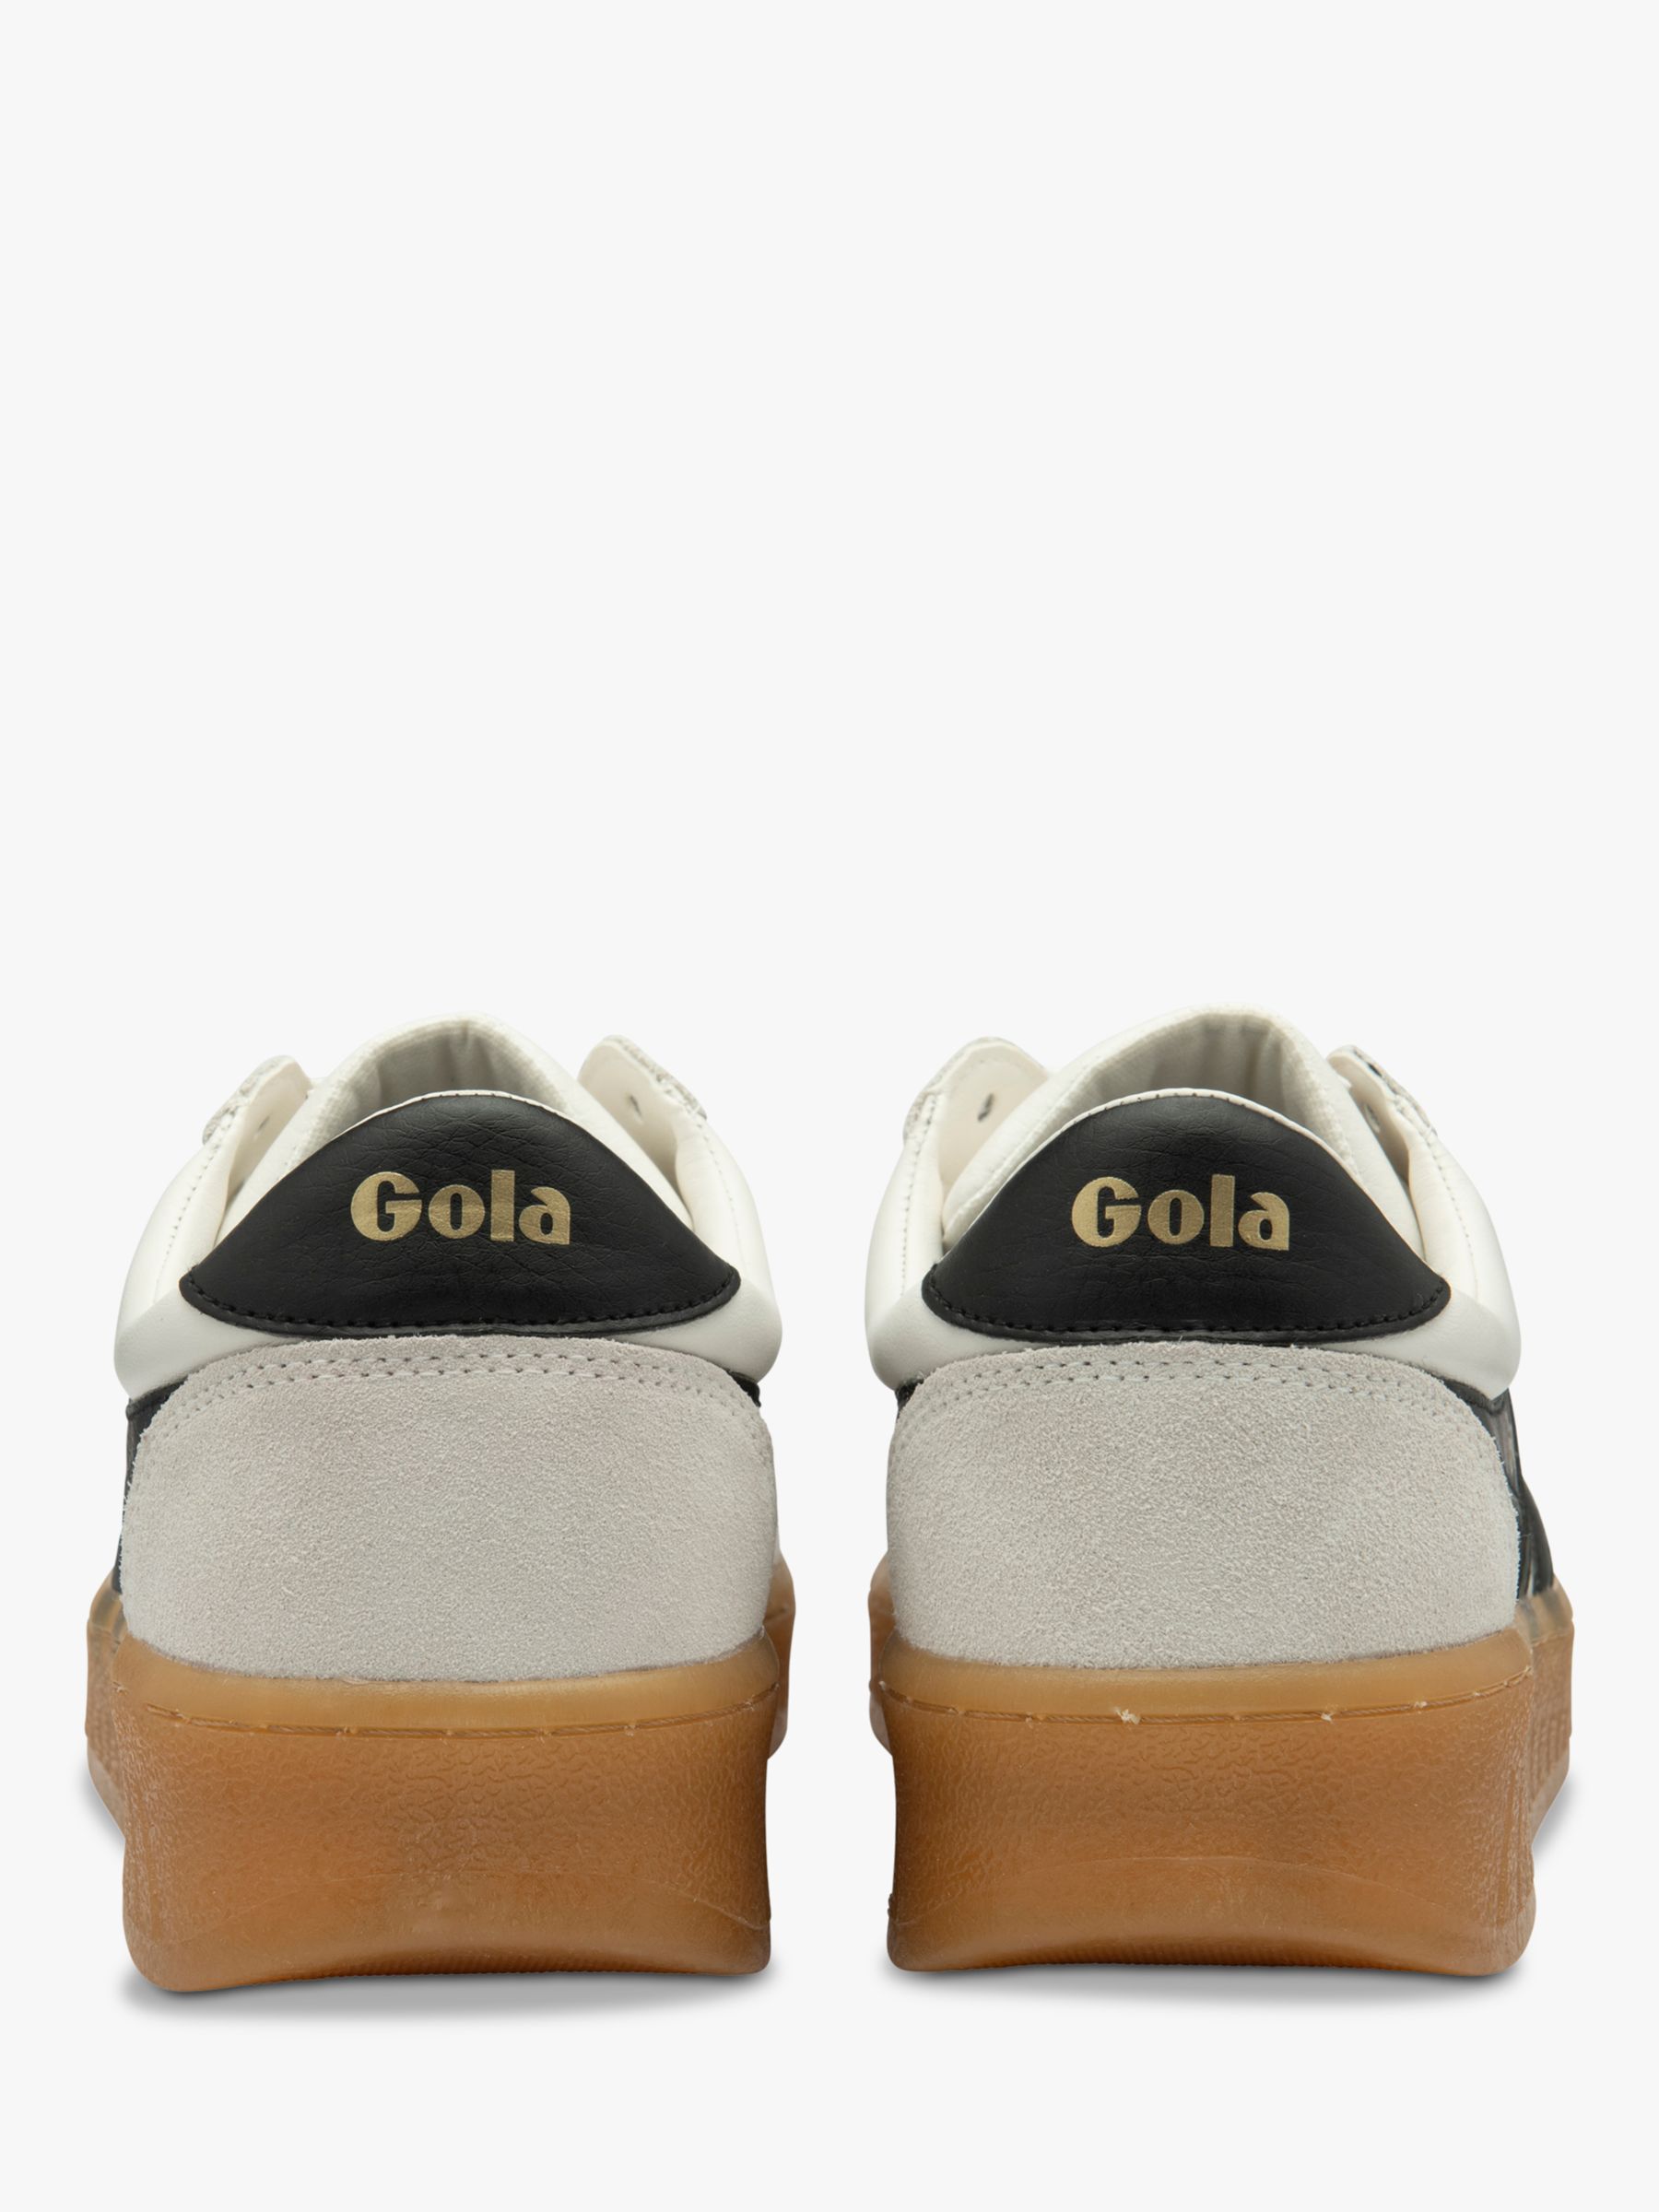 Buy Gola Classics Grandslam Leather Trainers, White/Black/Gum Online at johnlewis.com